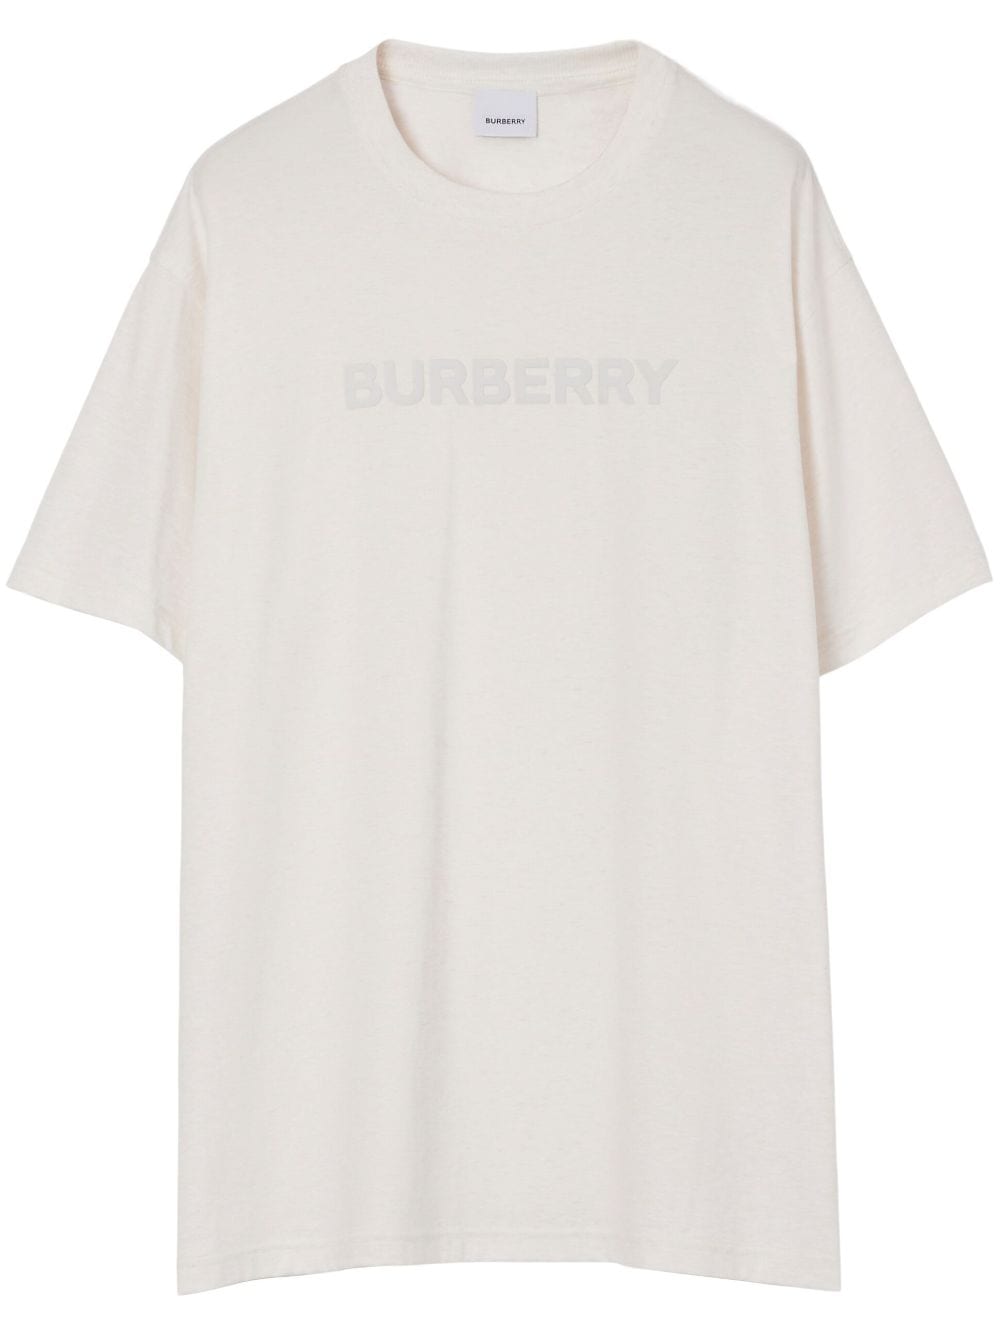 Burberry logo-print jersey cotton T-shirt - White